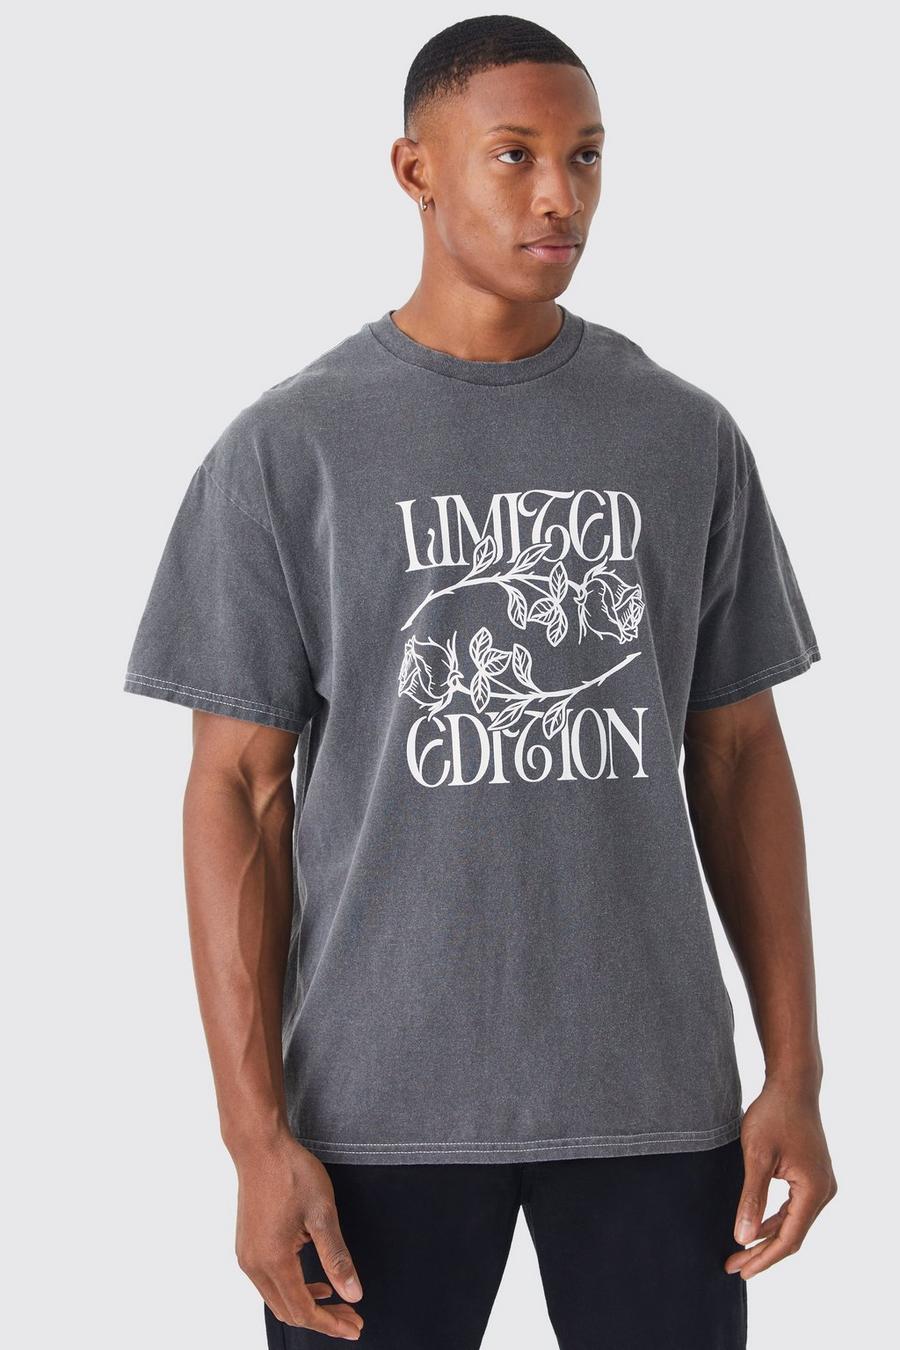 Charcoal grey Oversized Gebleekt Limited Edition T-Shirt